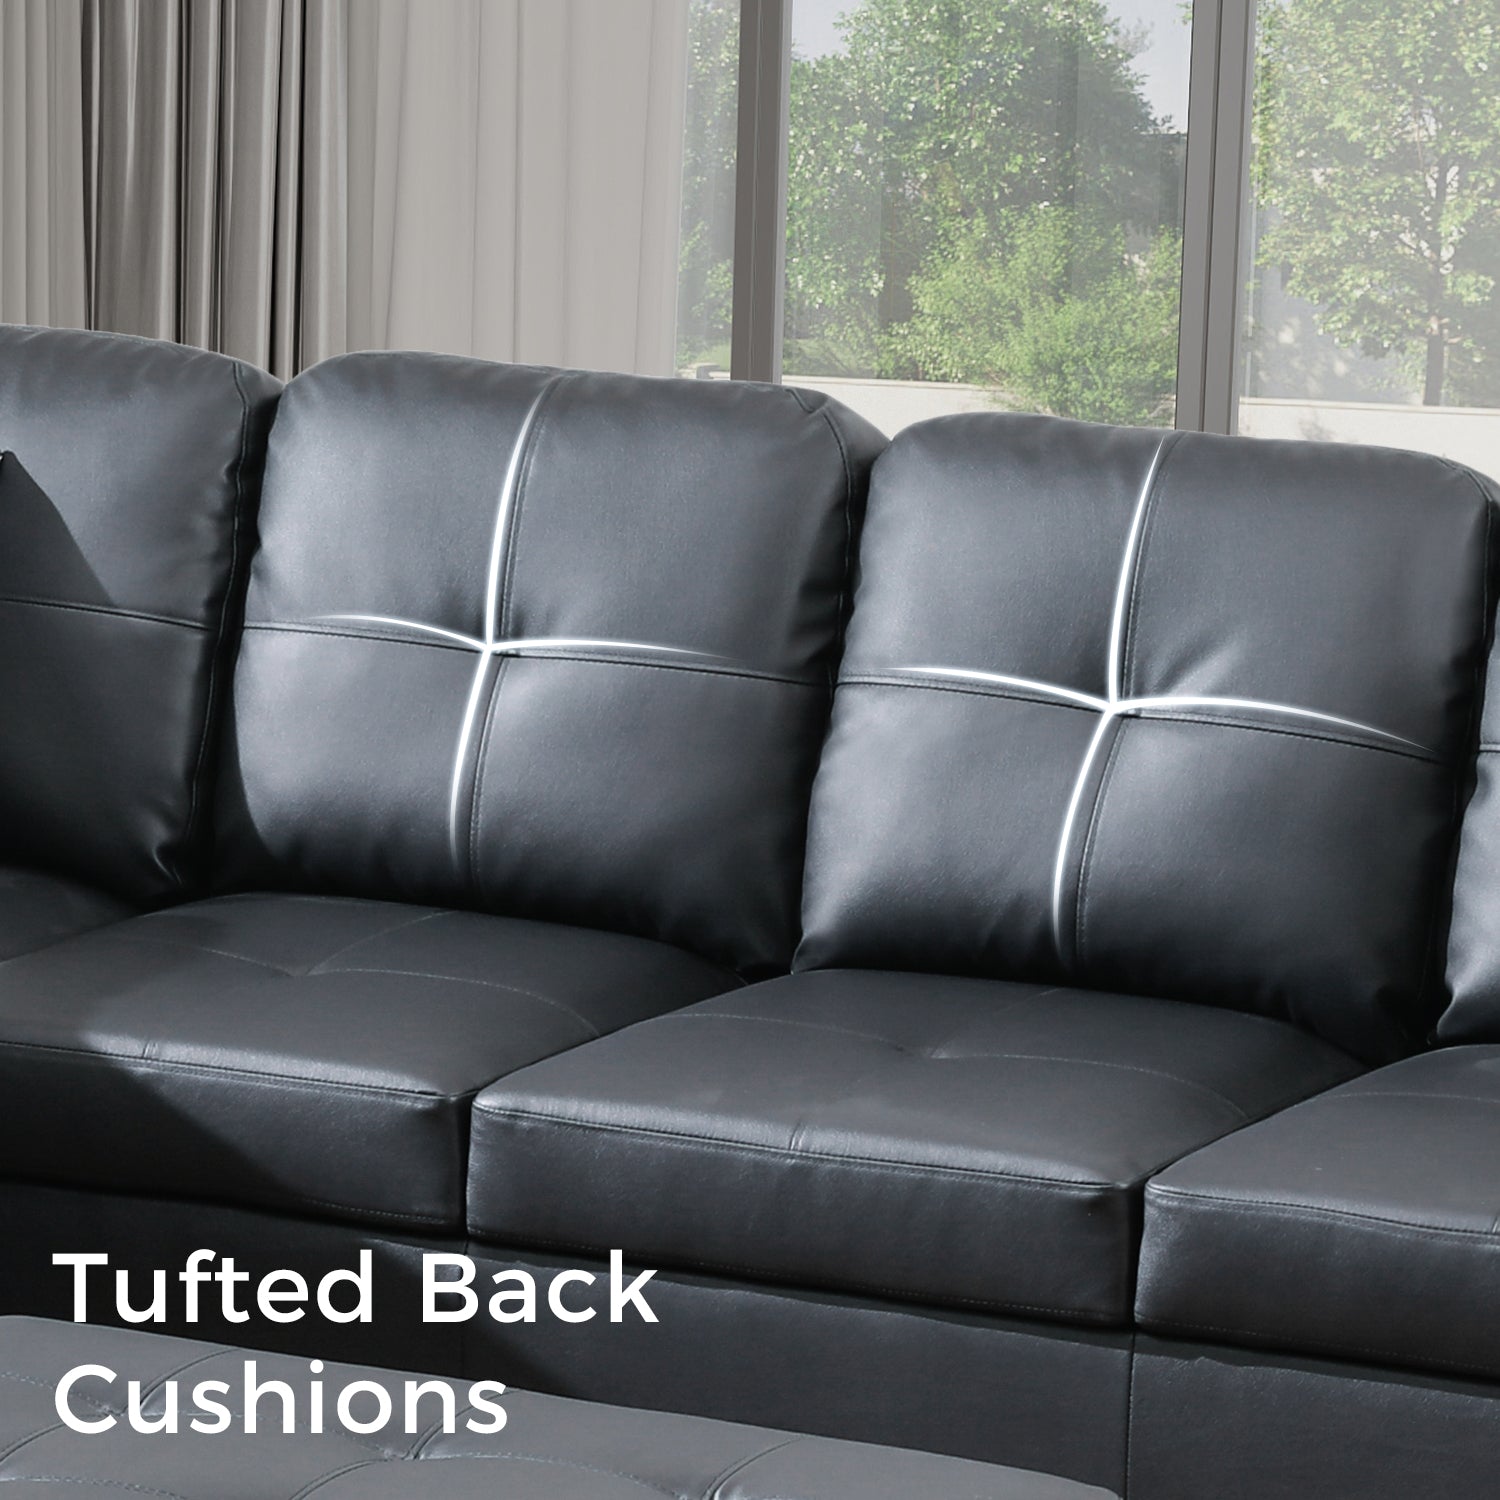 Ainehome Black L-Shape Faux Leather Sofa Set